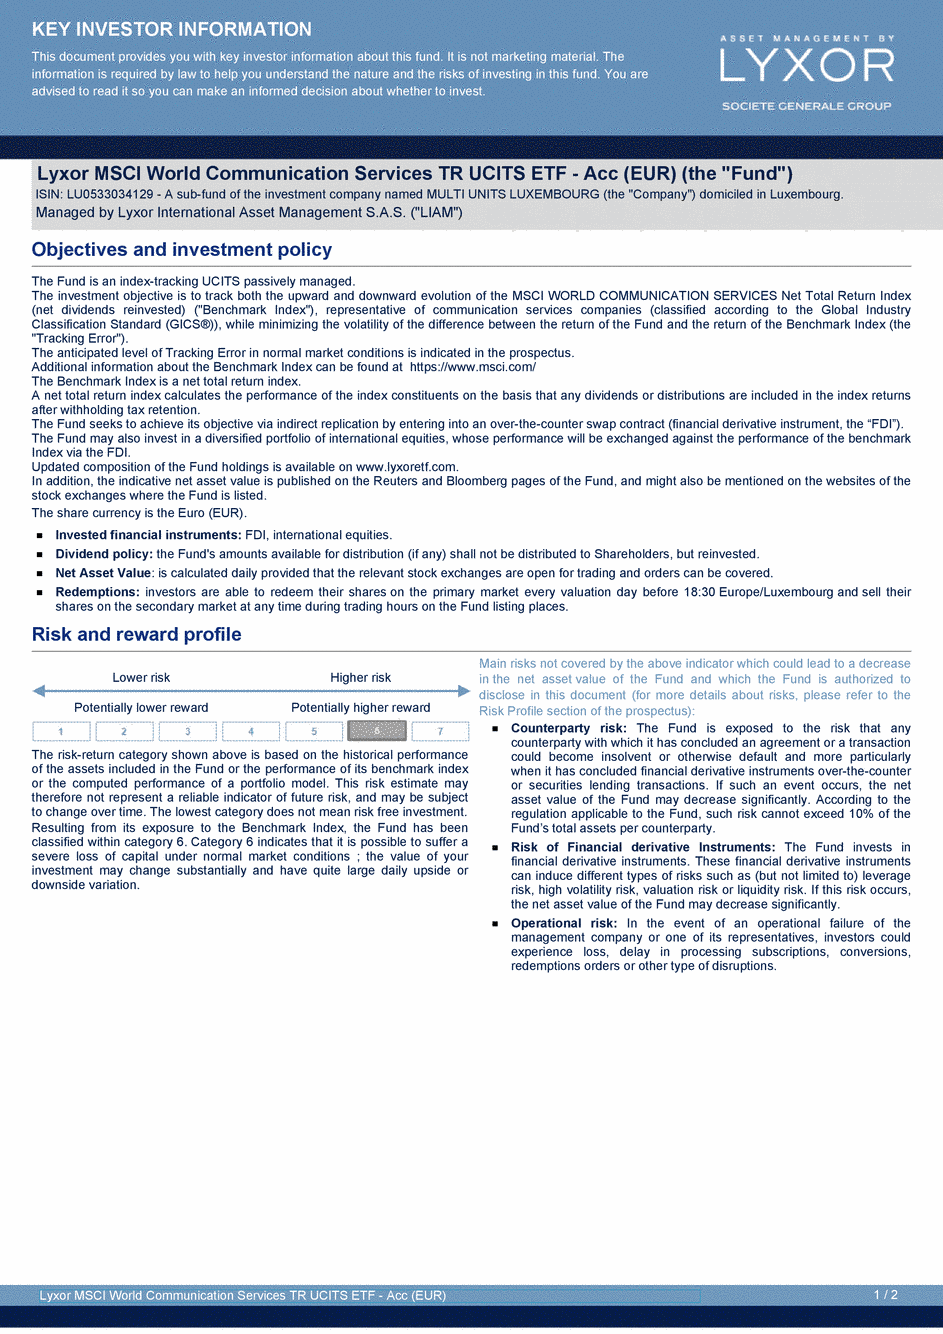 DICI Lyxor MSCI World Communication Services TR UCITS ETF - Acc (EUR) - 19/02/2021 - Anglais